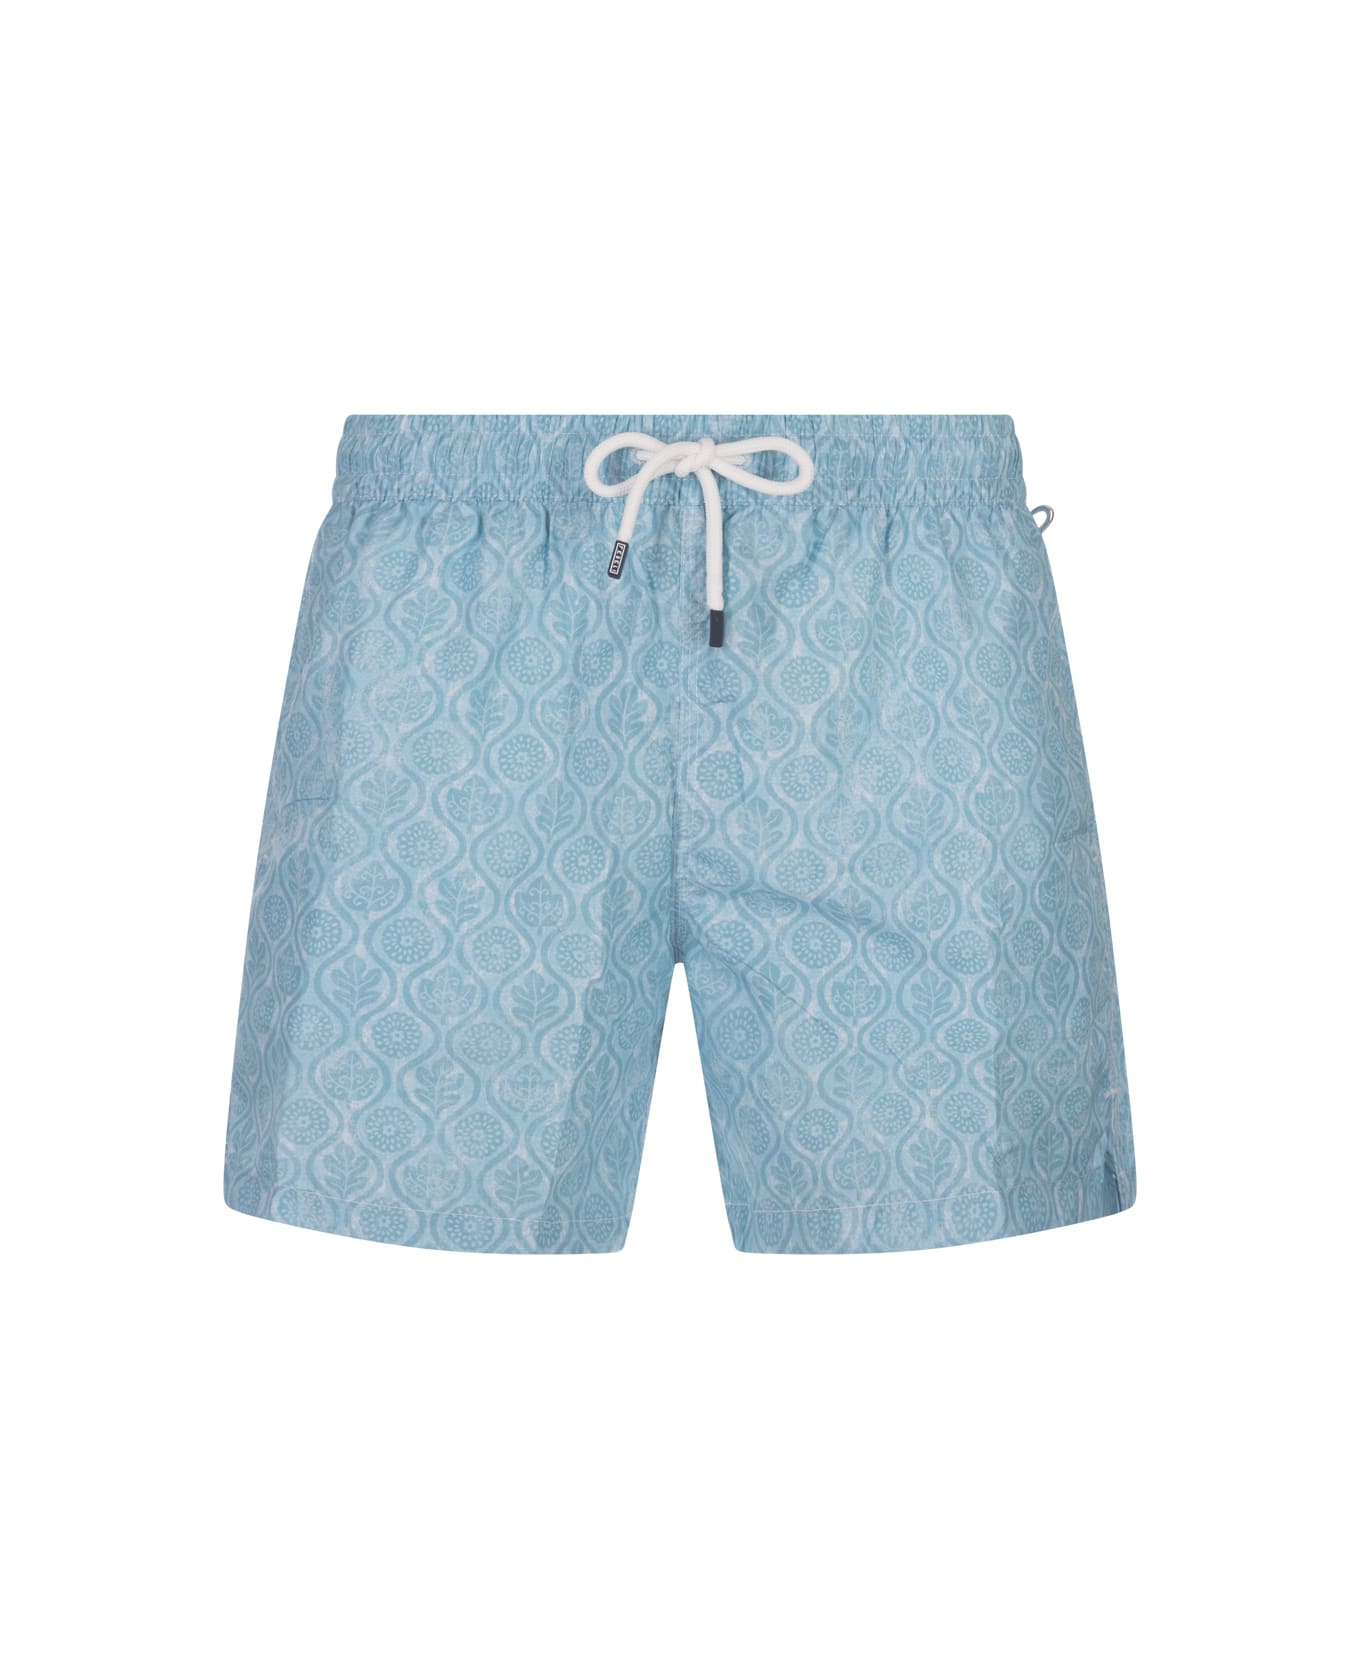 Fedeli Light Blue Swim Shorts With Flower And Leaf Pattern - Blue スイムトランクス